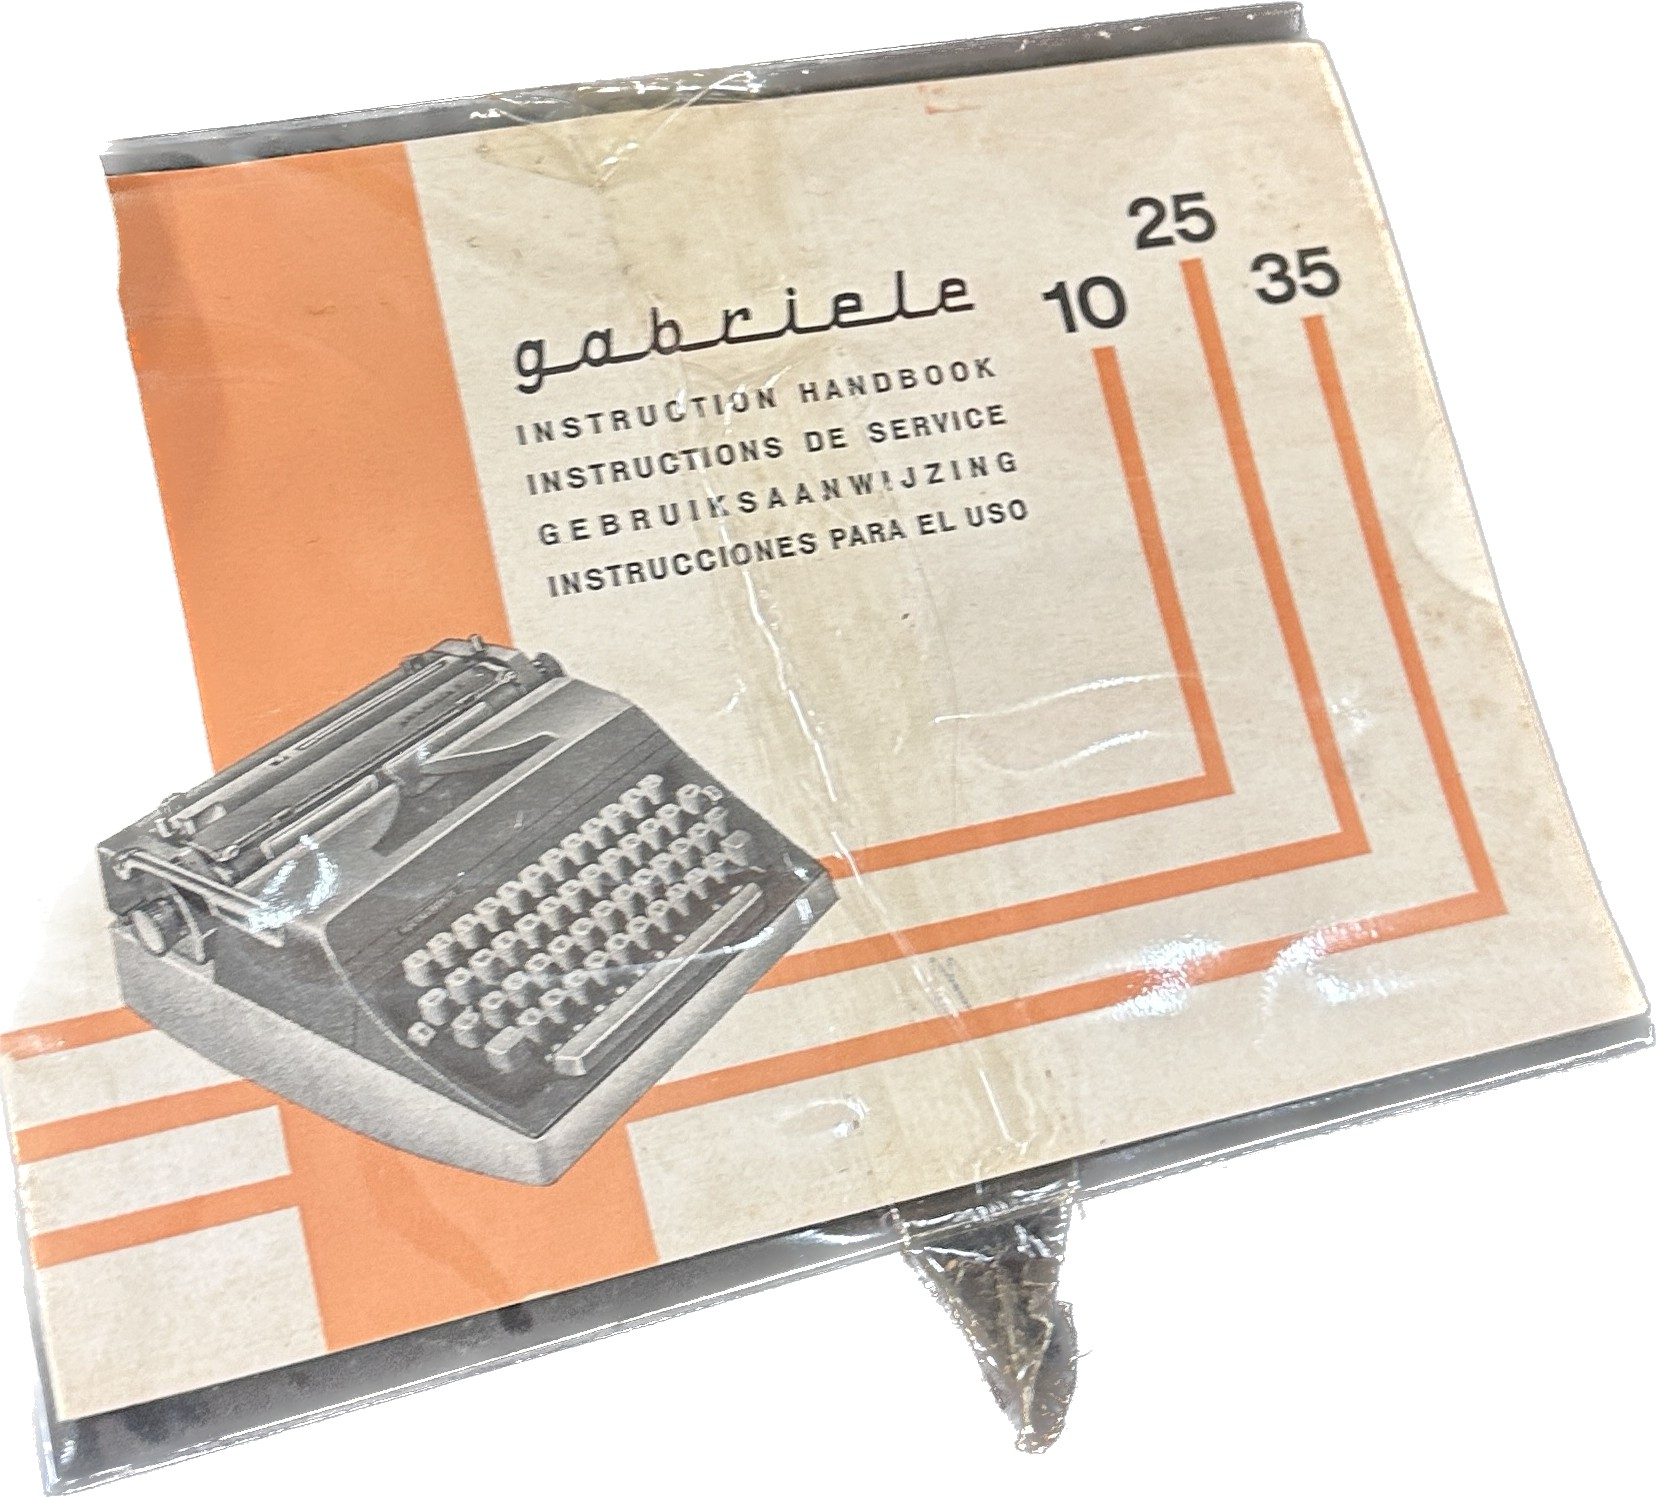 Cased Gabriele 25 typewriter, Eumig P 8 phonomatic projector, both untested - Bild 3 aus 3